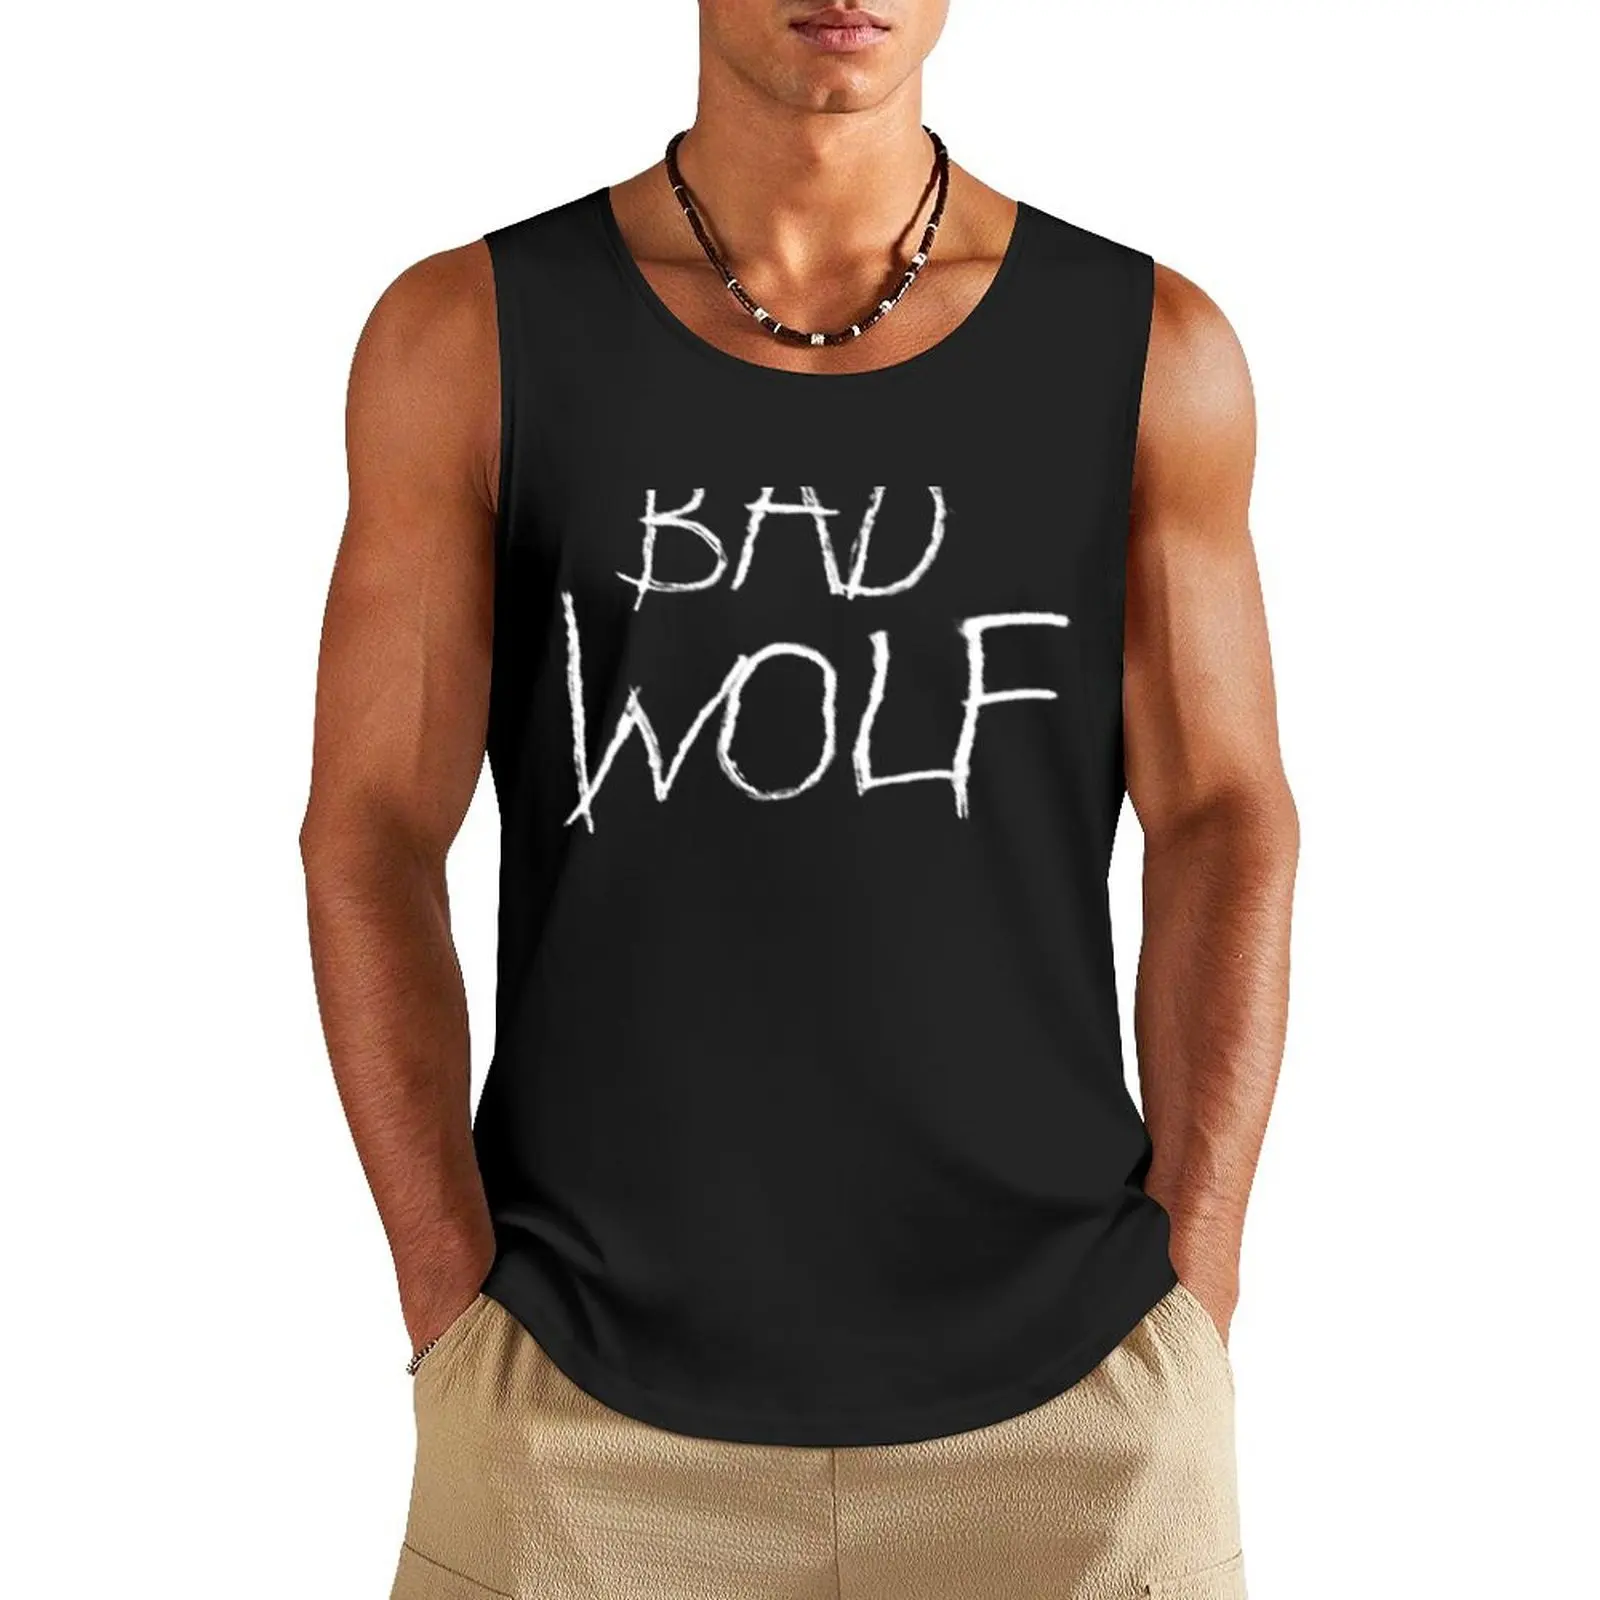 

Майка Bad Wolf Мужская, одежда для бодибилдинга, рубашка без рукавов